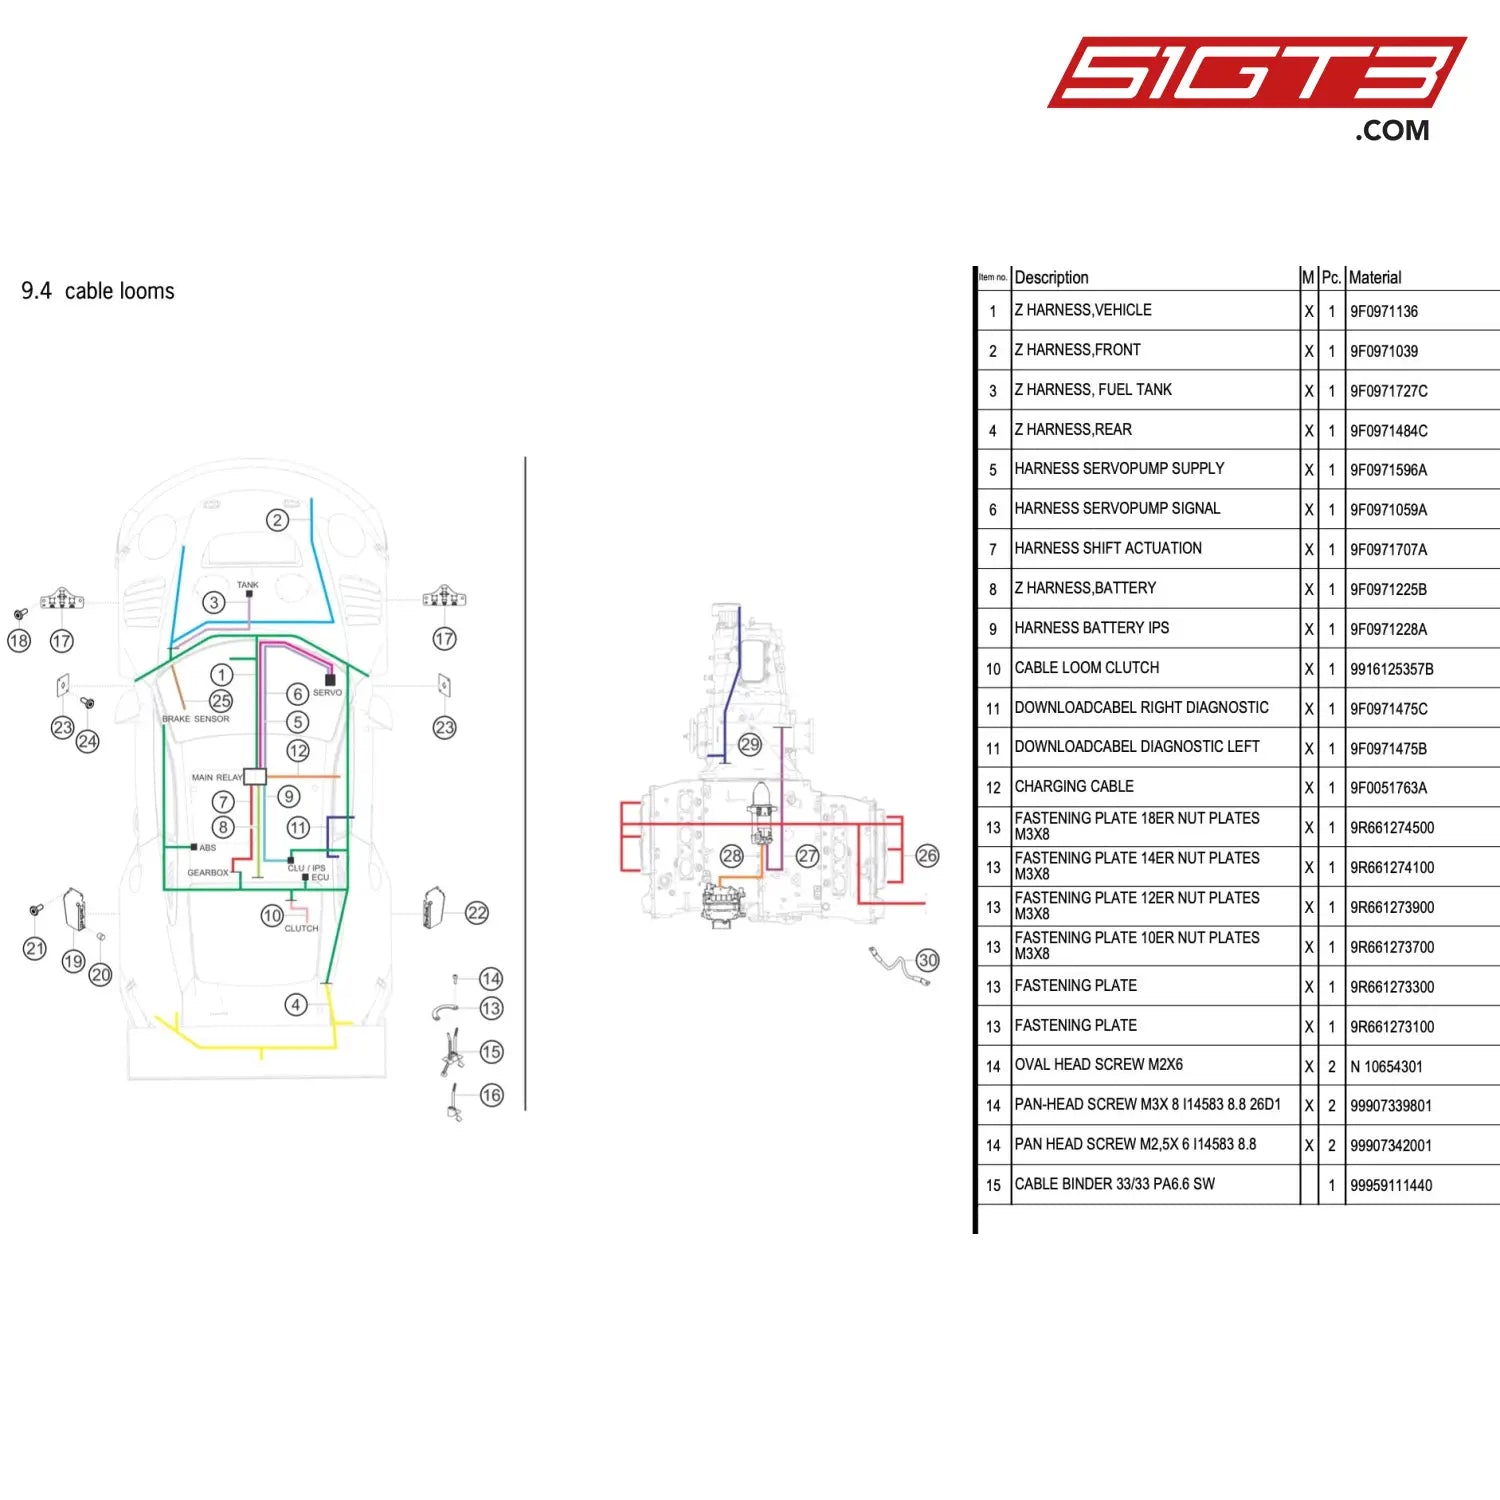 Fastening Plate 10Er Nut Plates M3X8 - 9R661273700 [Porsche 911 Gt3 R Type 991 (Gen 2)] Cable Looms